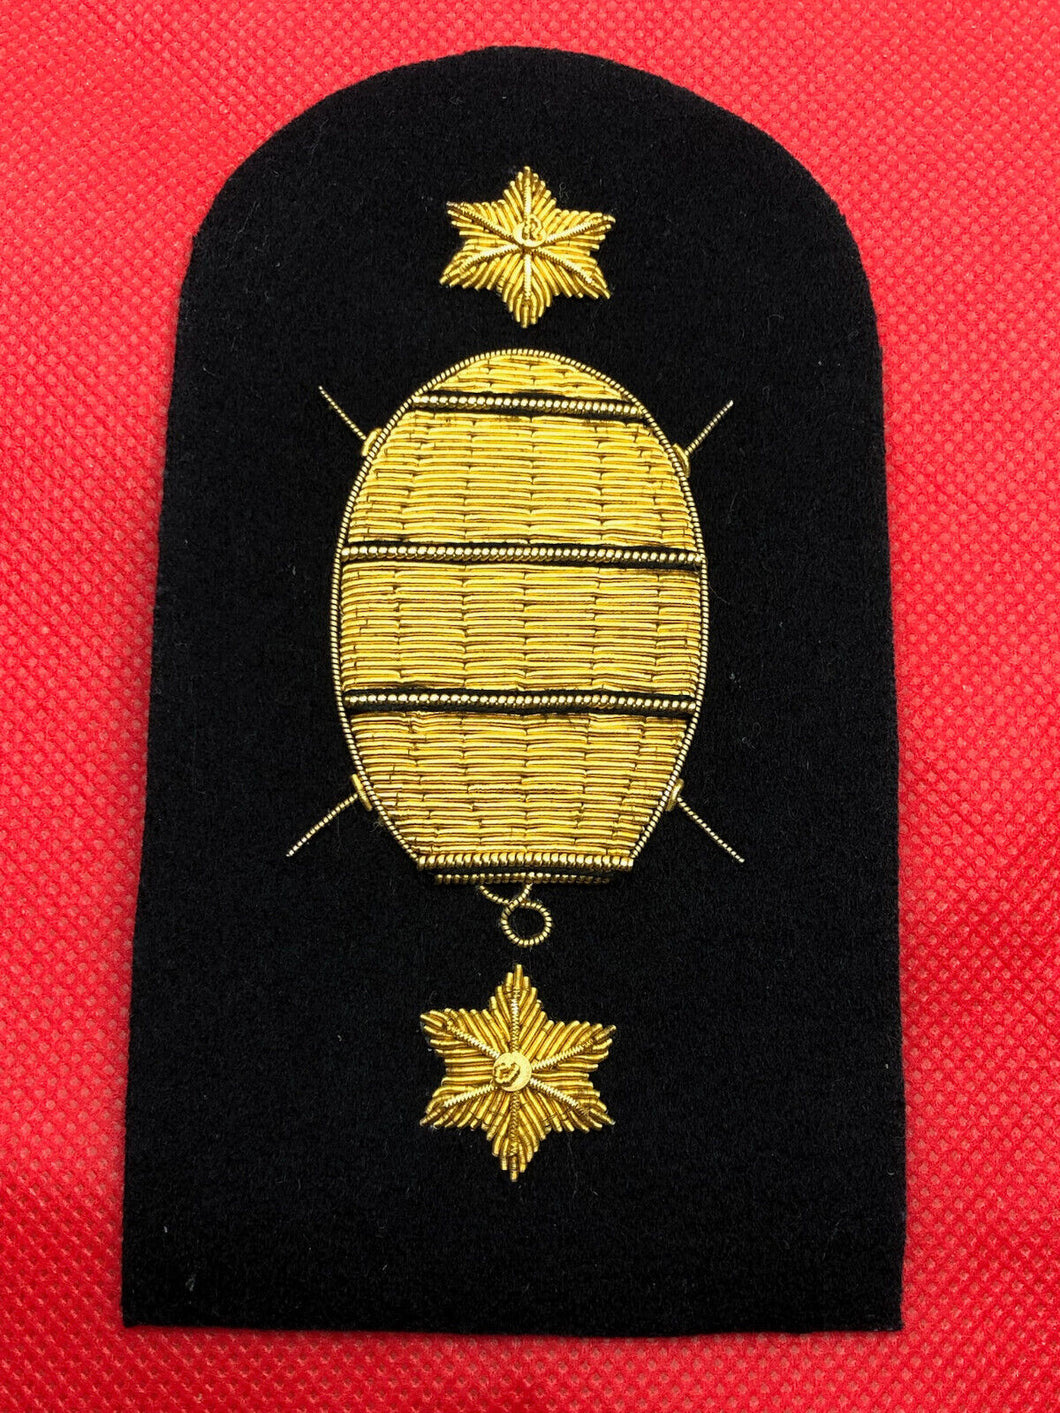 Genuine British Royal Navy Bullion Badge - Mine Warfare MW 2 Star